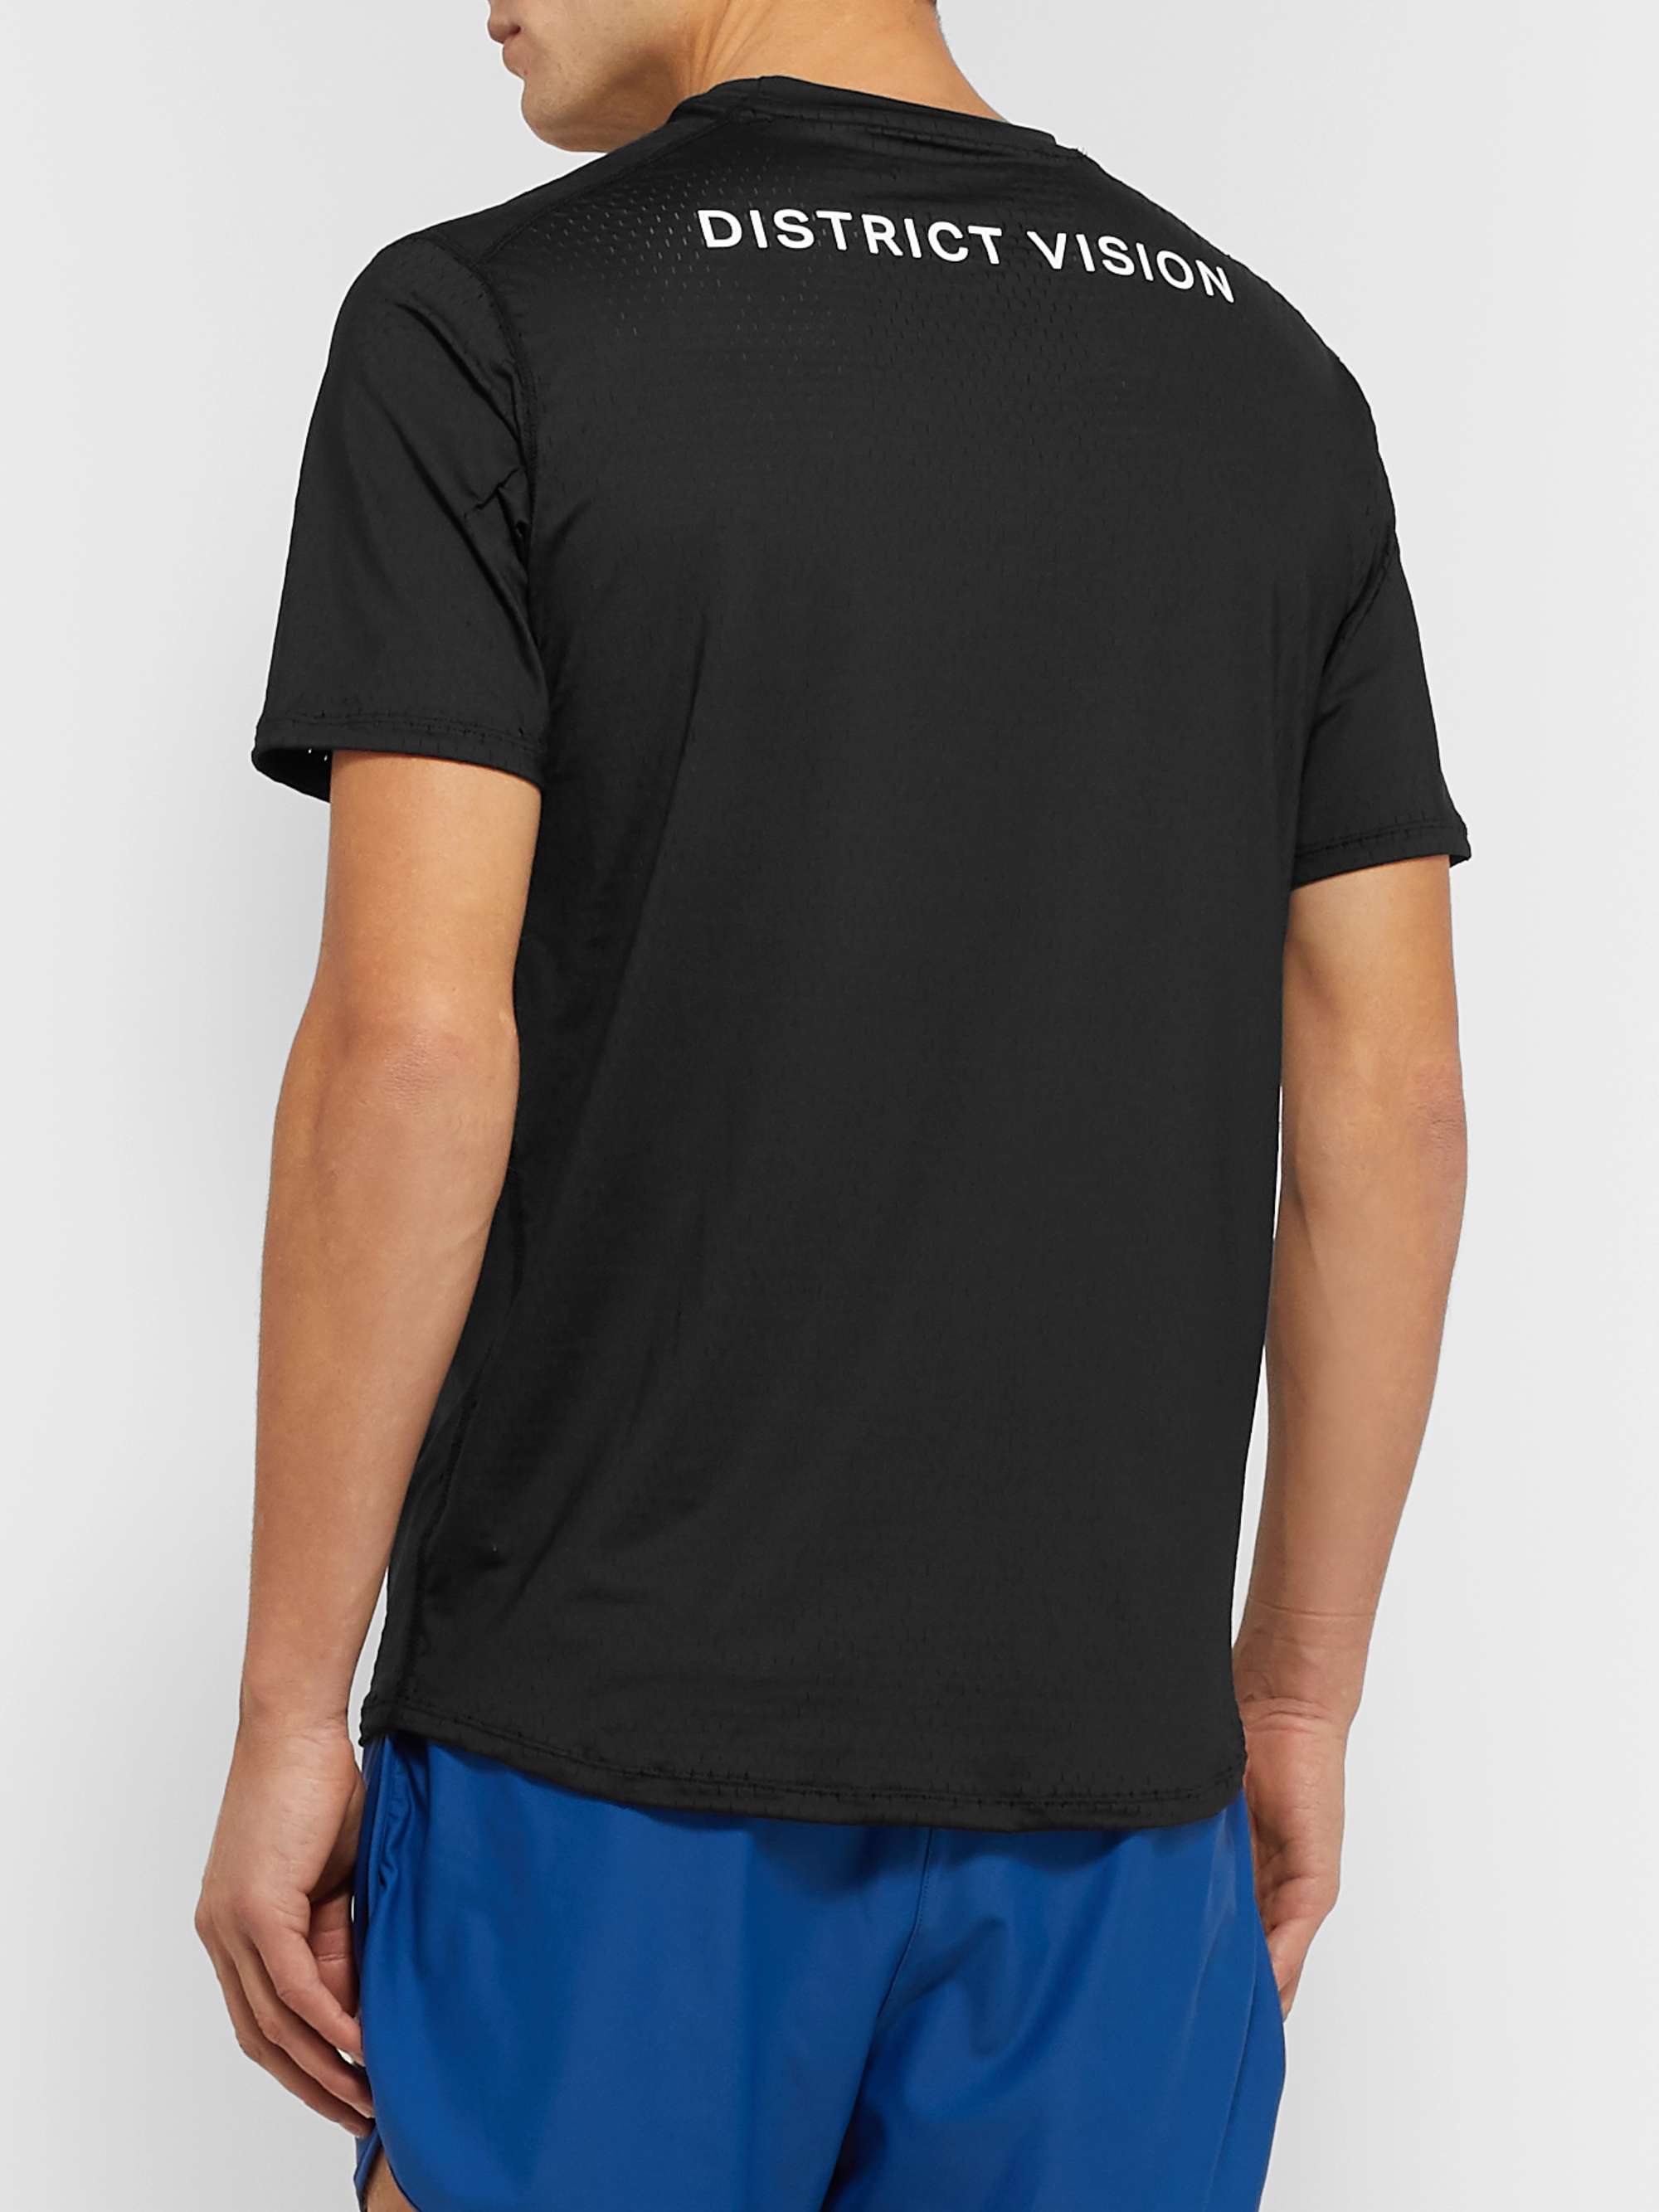 DISTRICT VISION Slim-Fit Air-Wear Stretch-Mesh T-Shirt